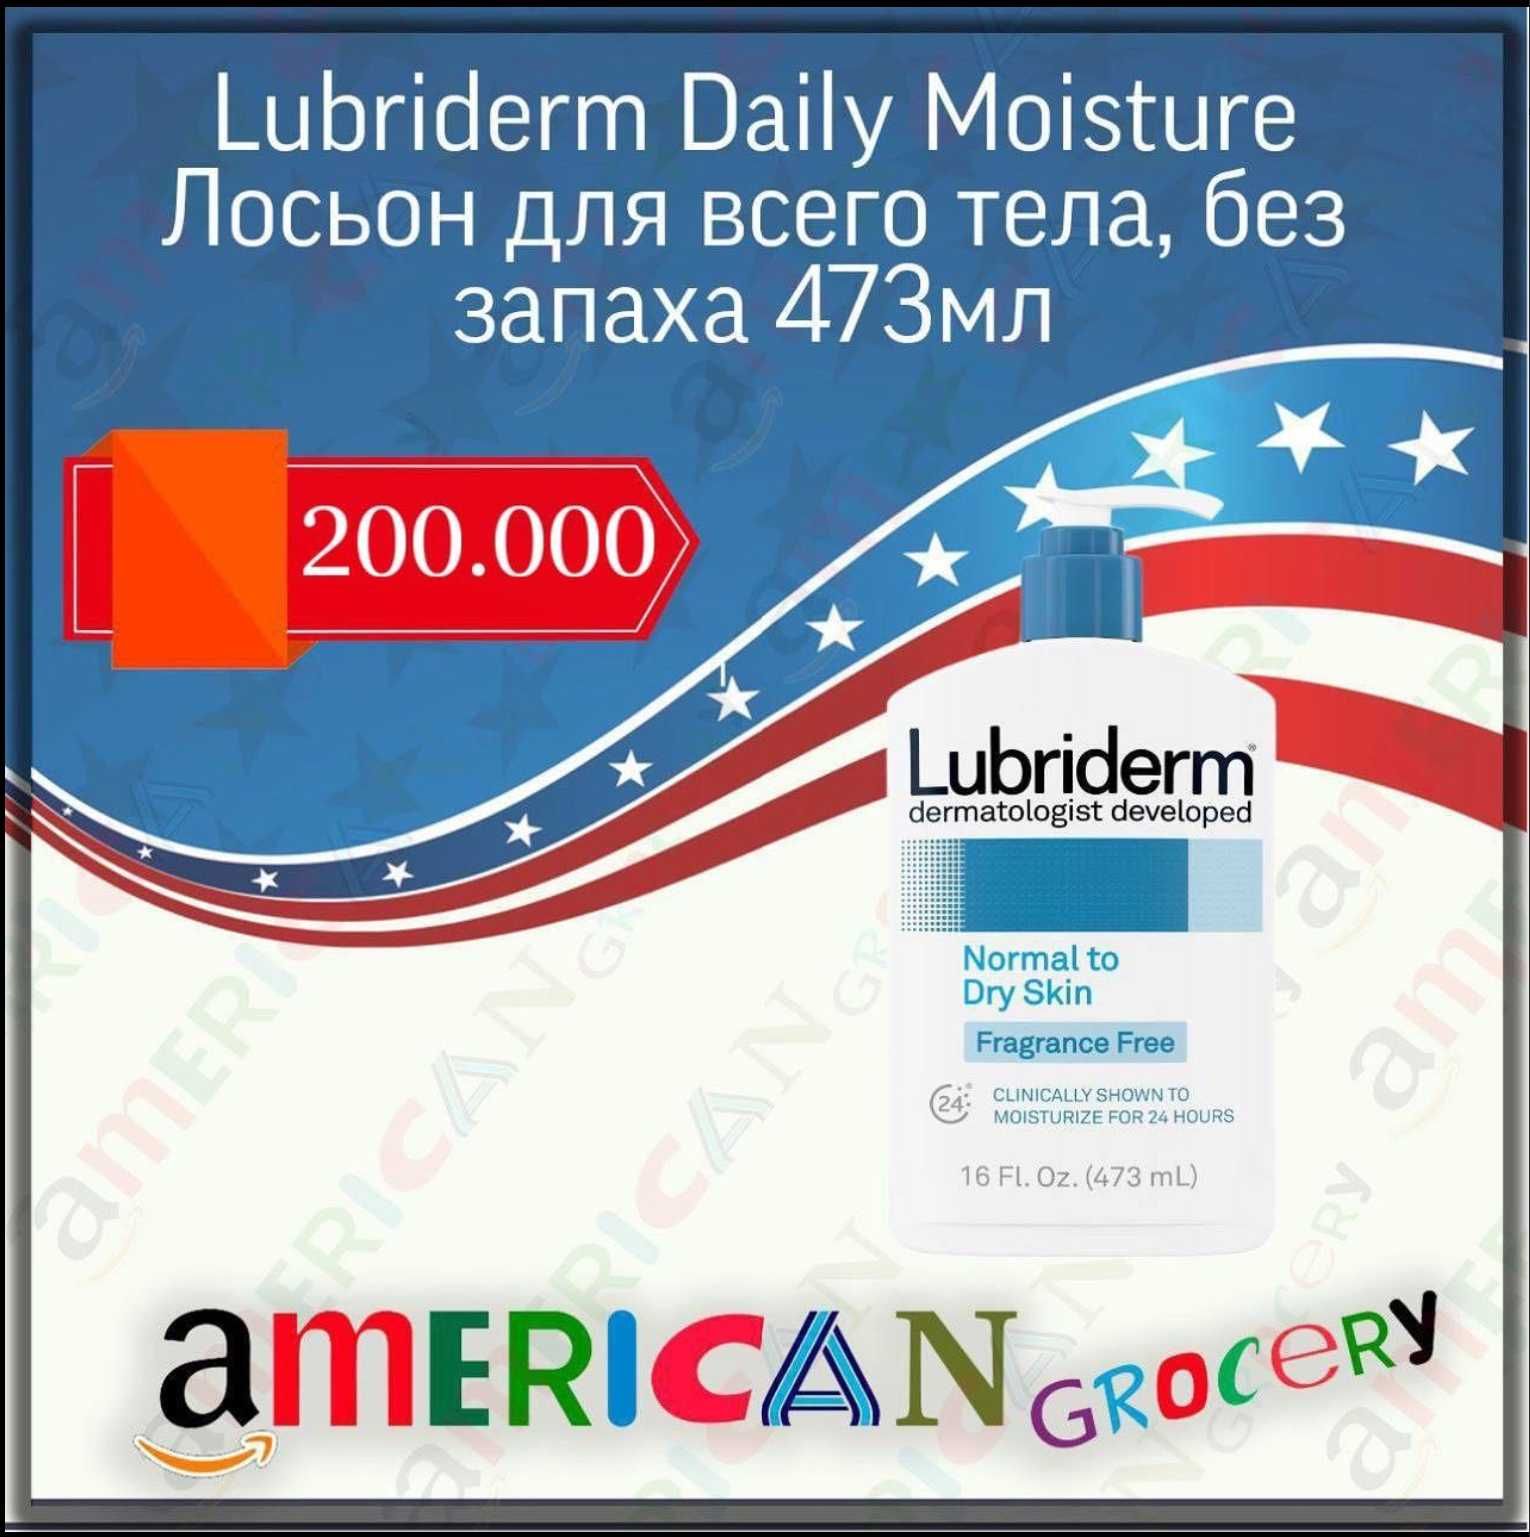 Lubriderm Daily Moisture Full Body Lotion, Fragrance-Free